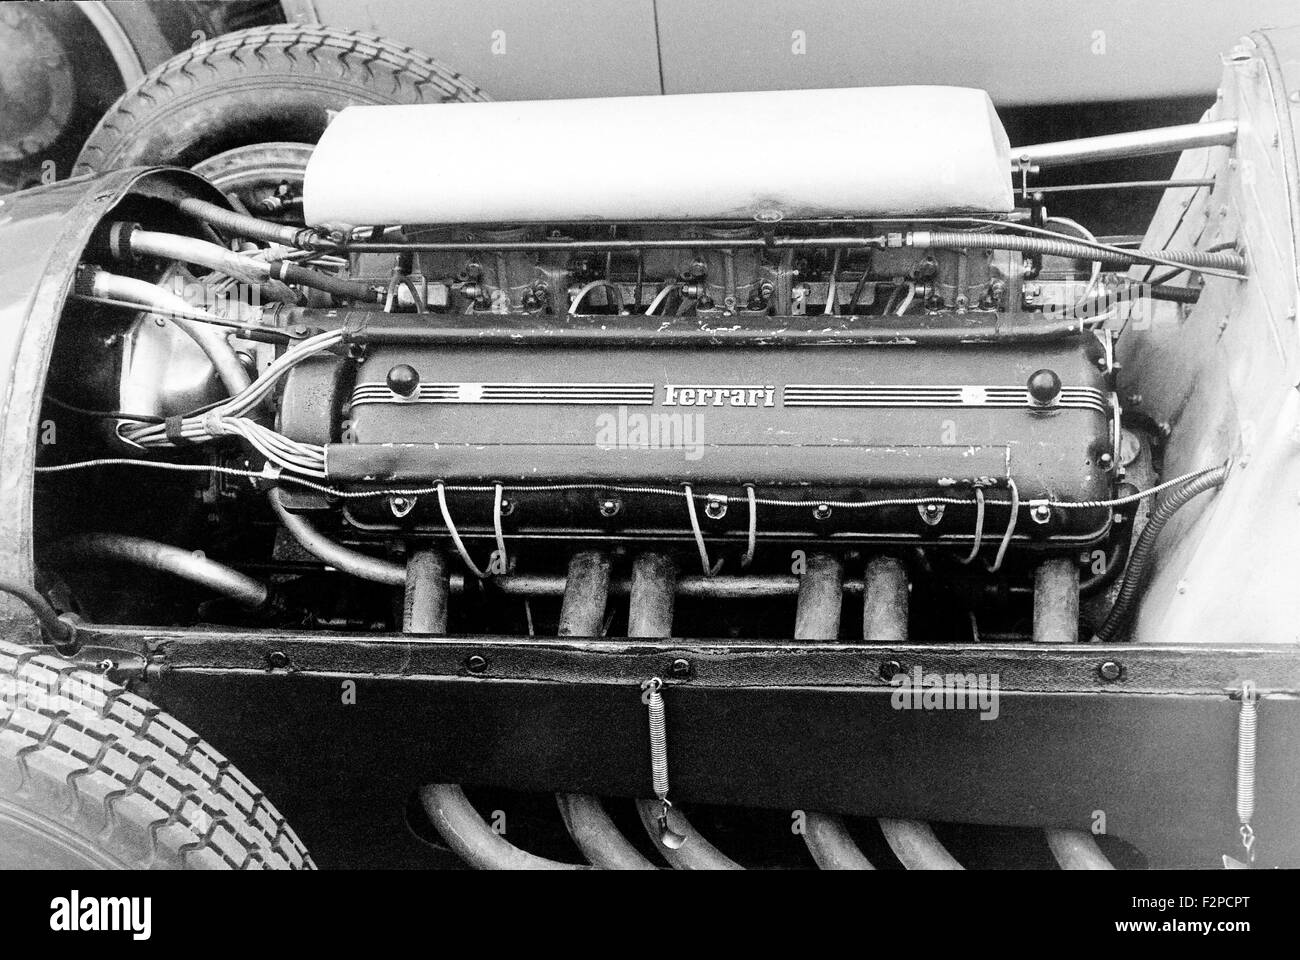 1951 Ferrari 375 Engine Stock Photo Alamy